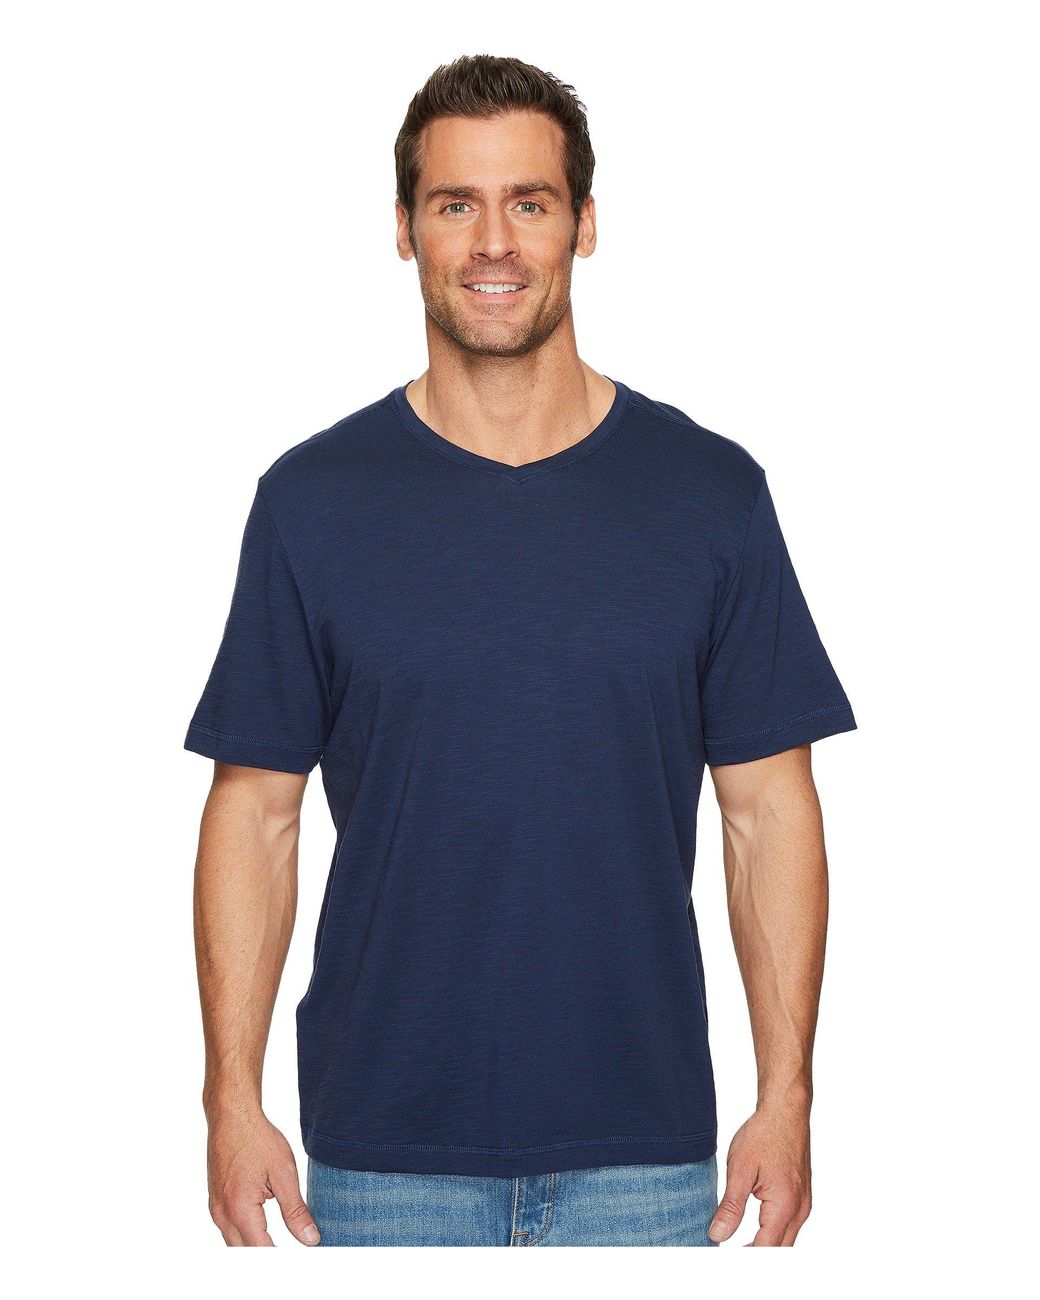 Tommy Bahama Cotton Portside Palms V-neck T-shirt in Blue for Men - Lyst